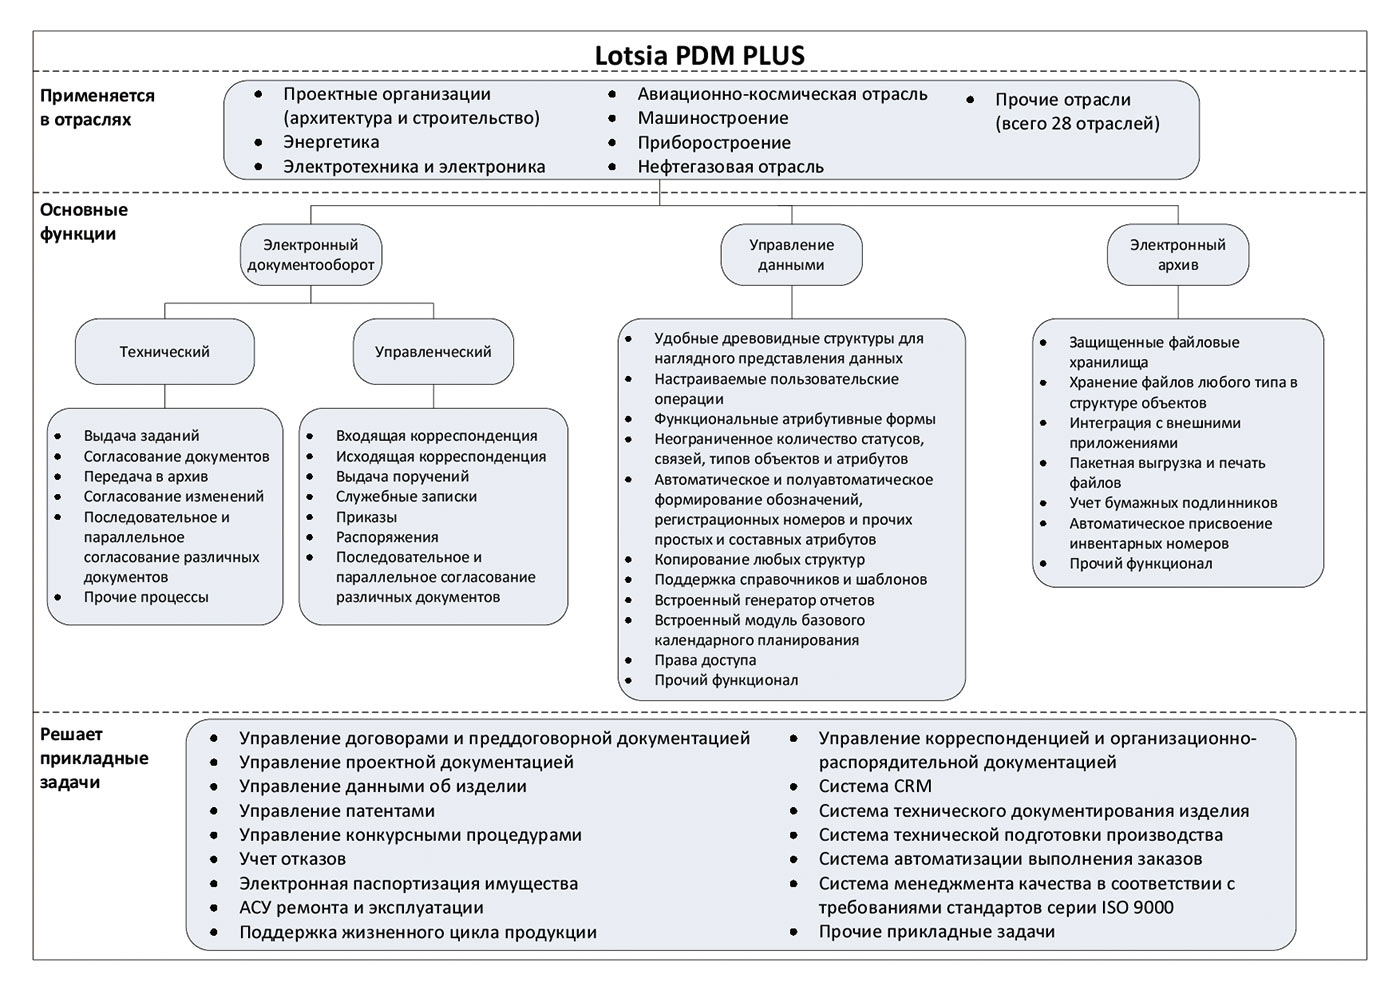 Рис. 1. Краткая схема применения Lotsia PDM PLUS